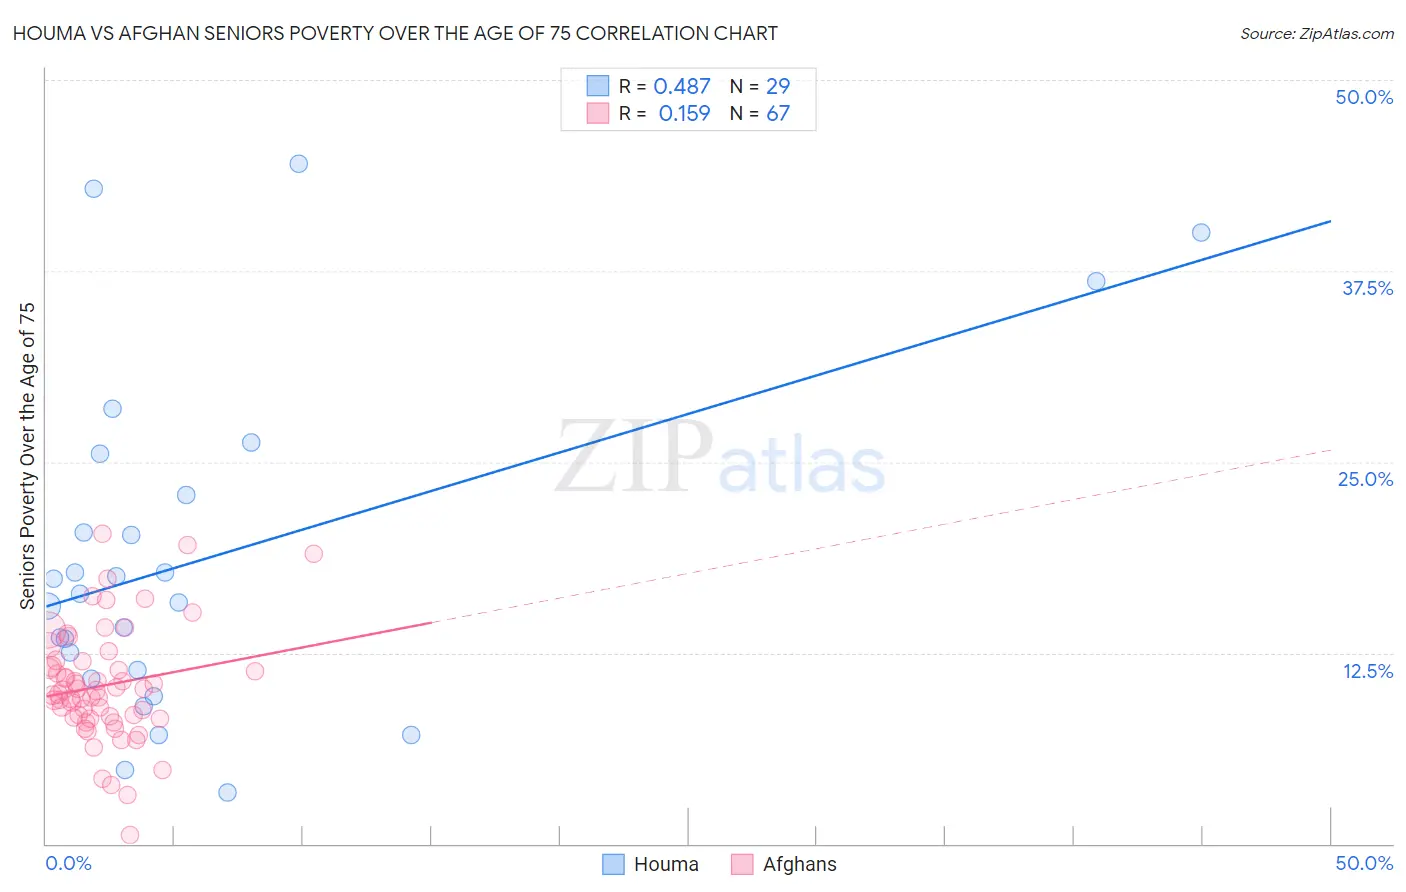 Houma vs Afghan Seniors Poverty Over the Age of 75